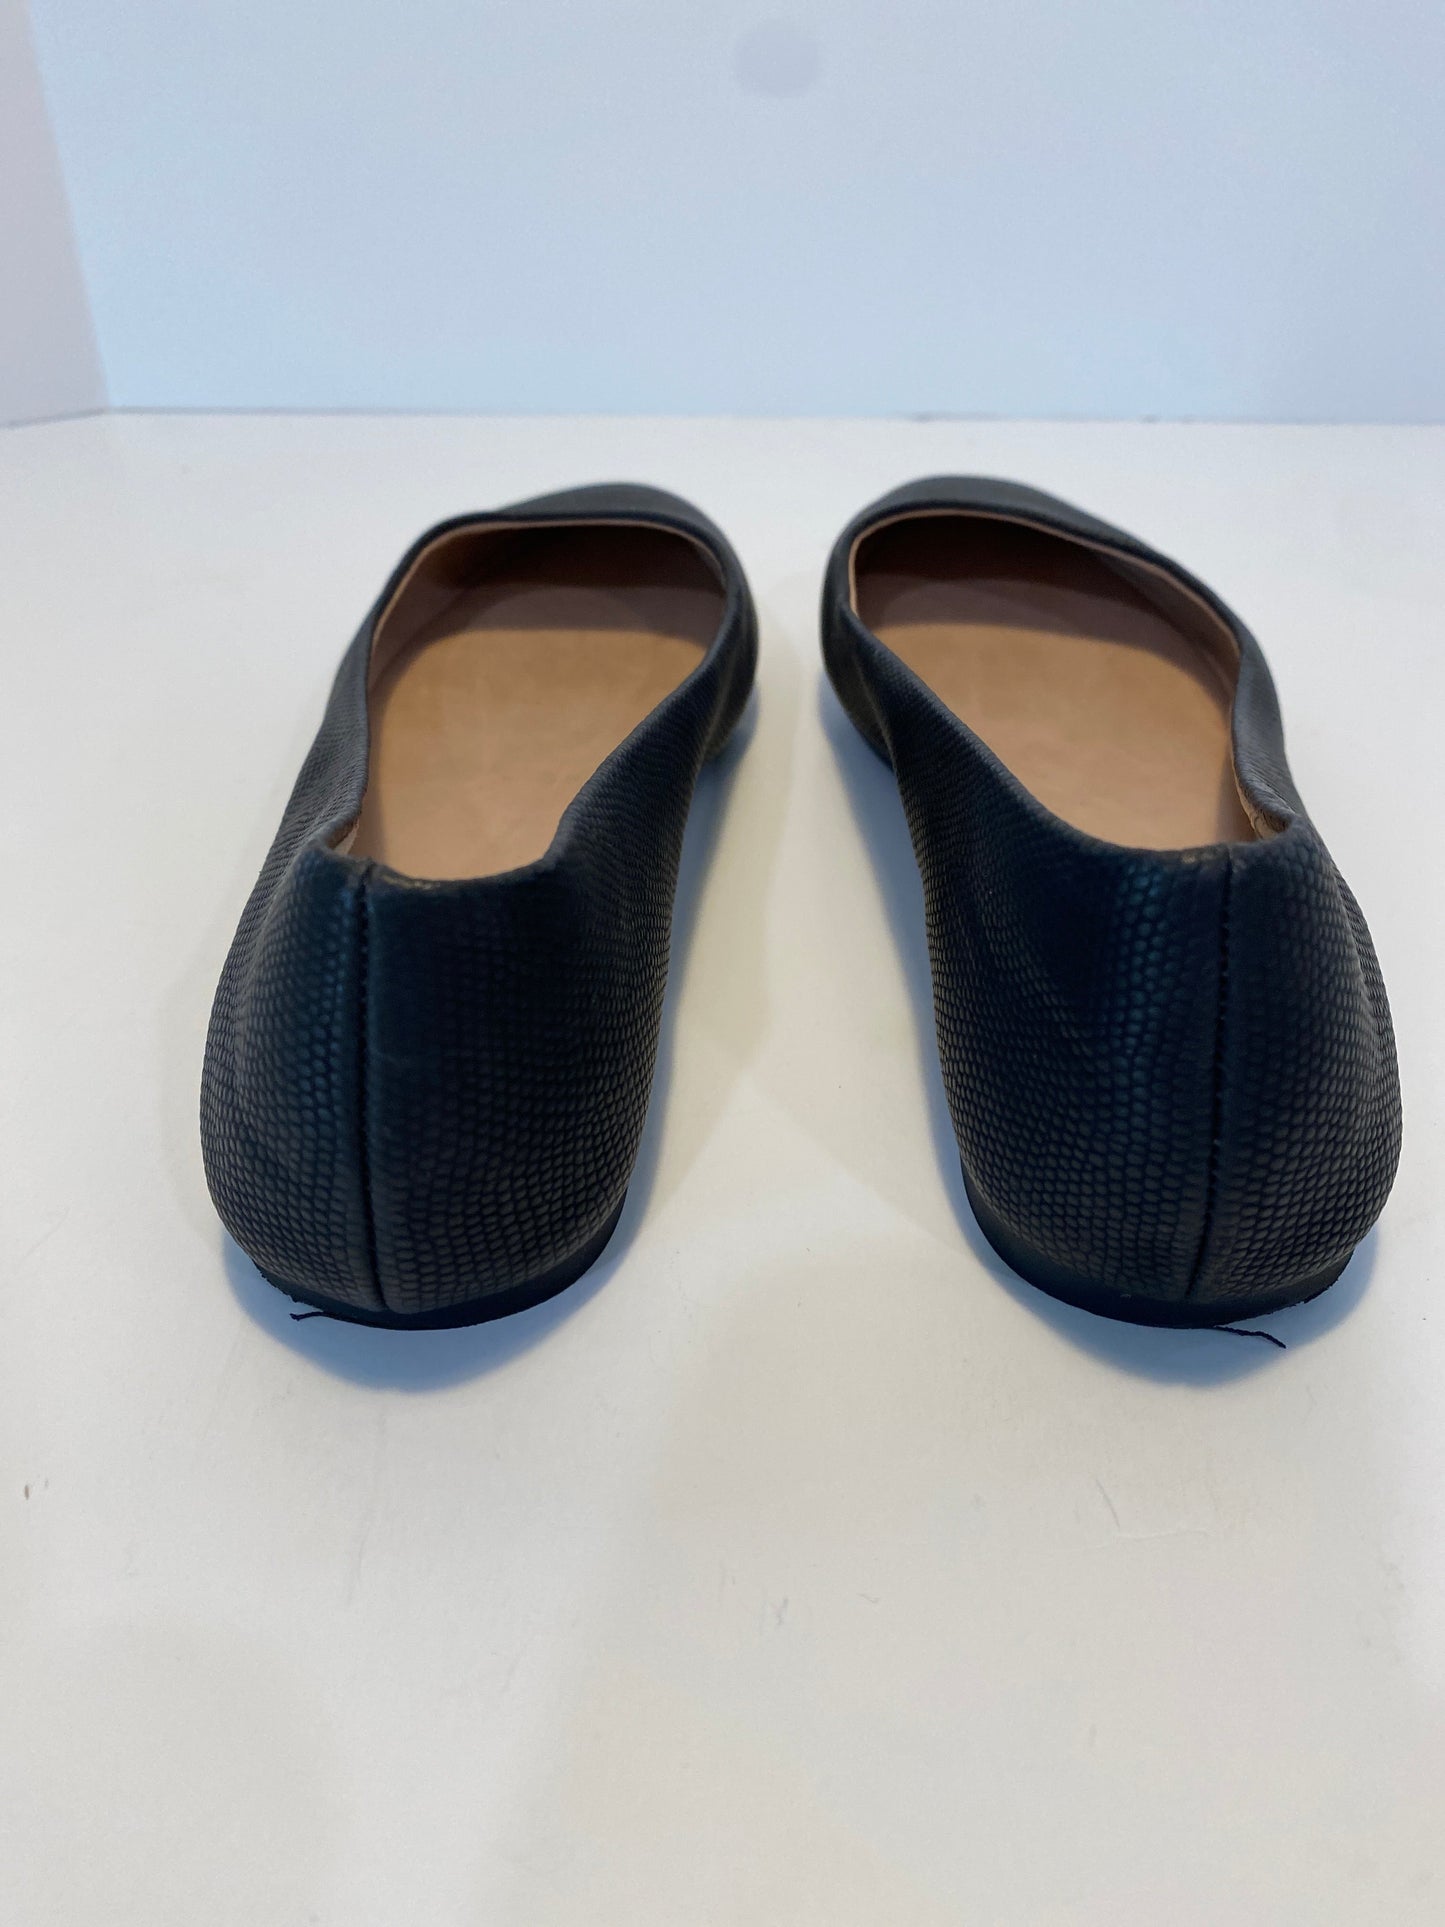 Black Shoes Flats Mix No 6, Size 7.5